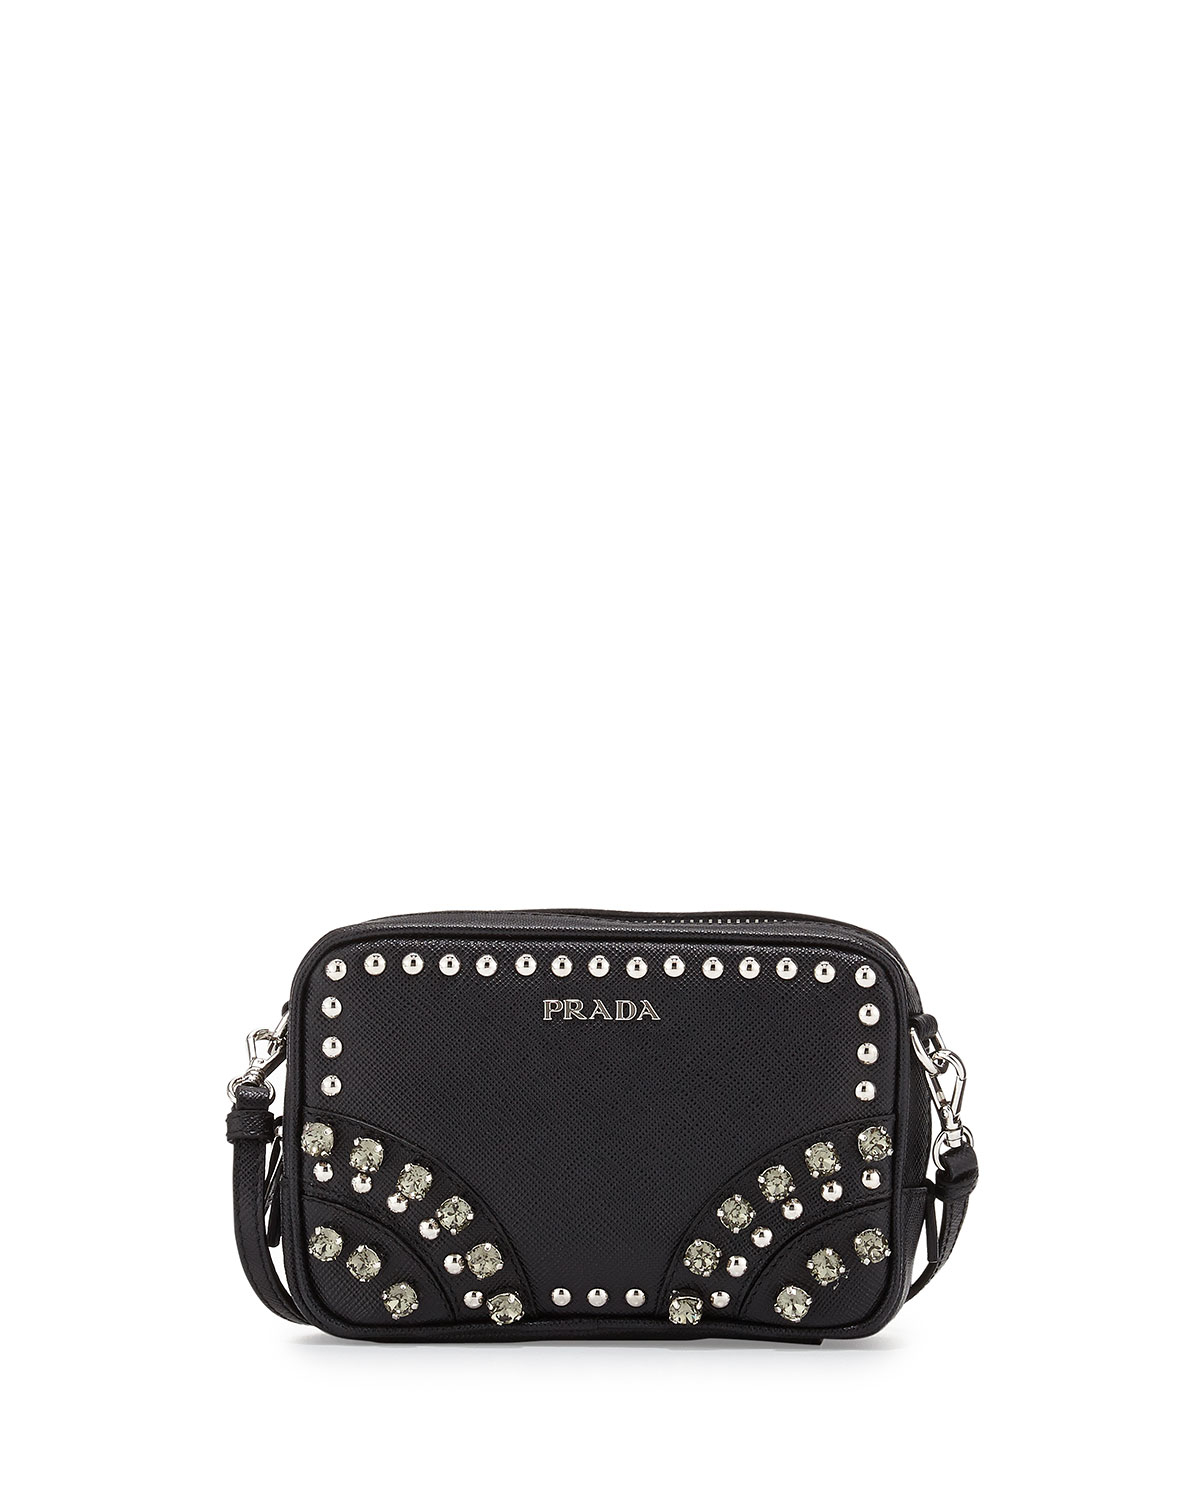 nylon prada wallet - Prada Saffiano Crystal Crossbody Bag in Black | Lyst